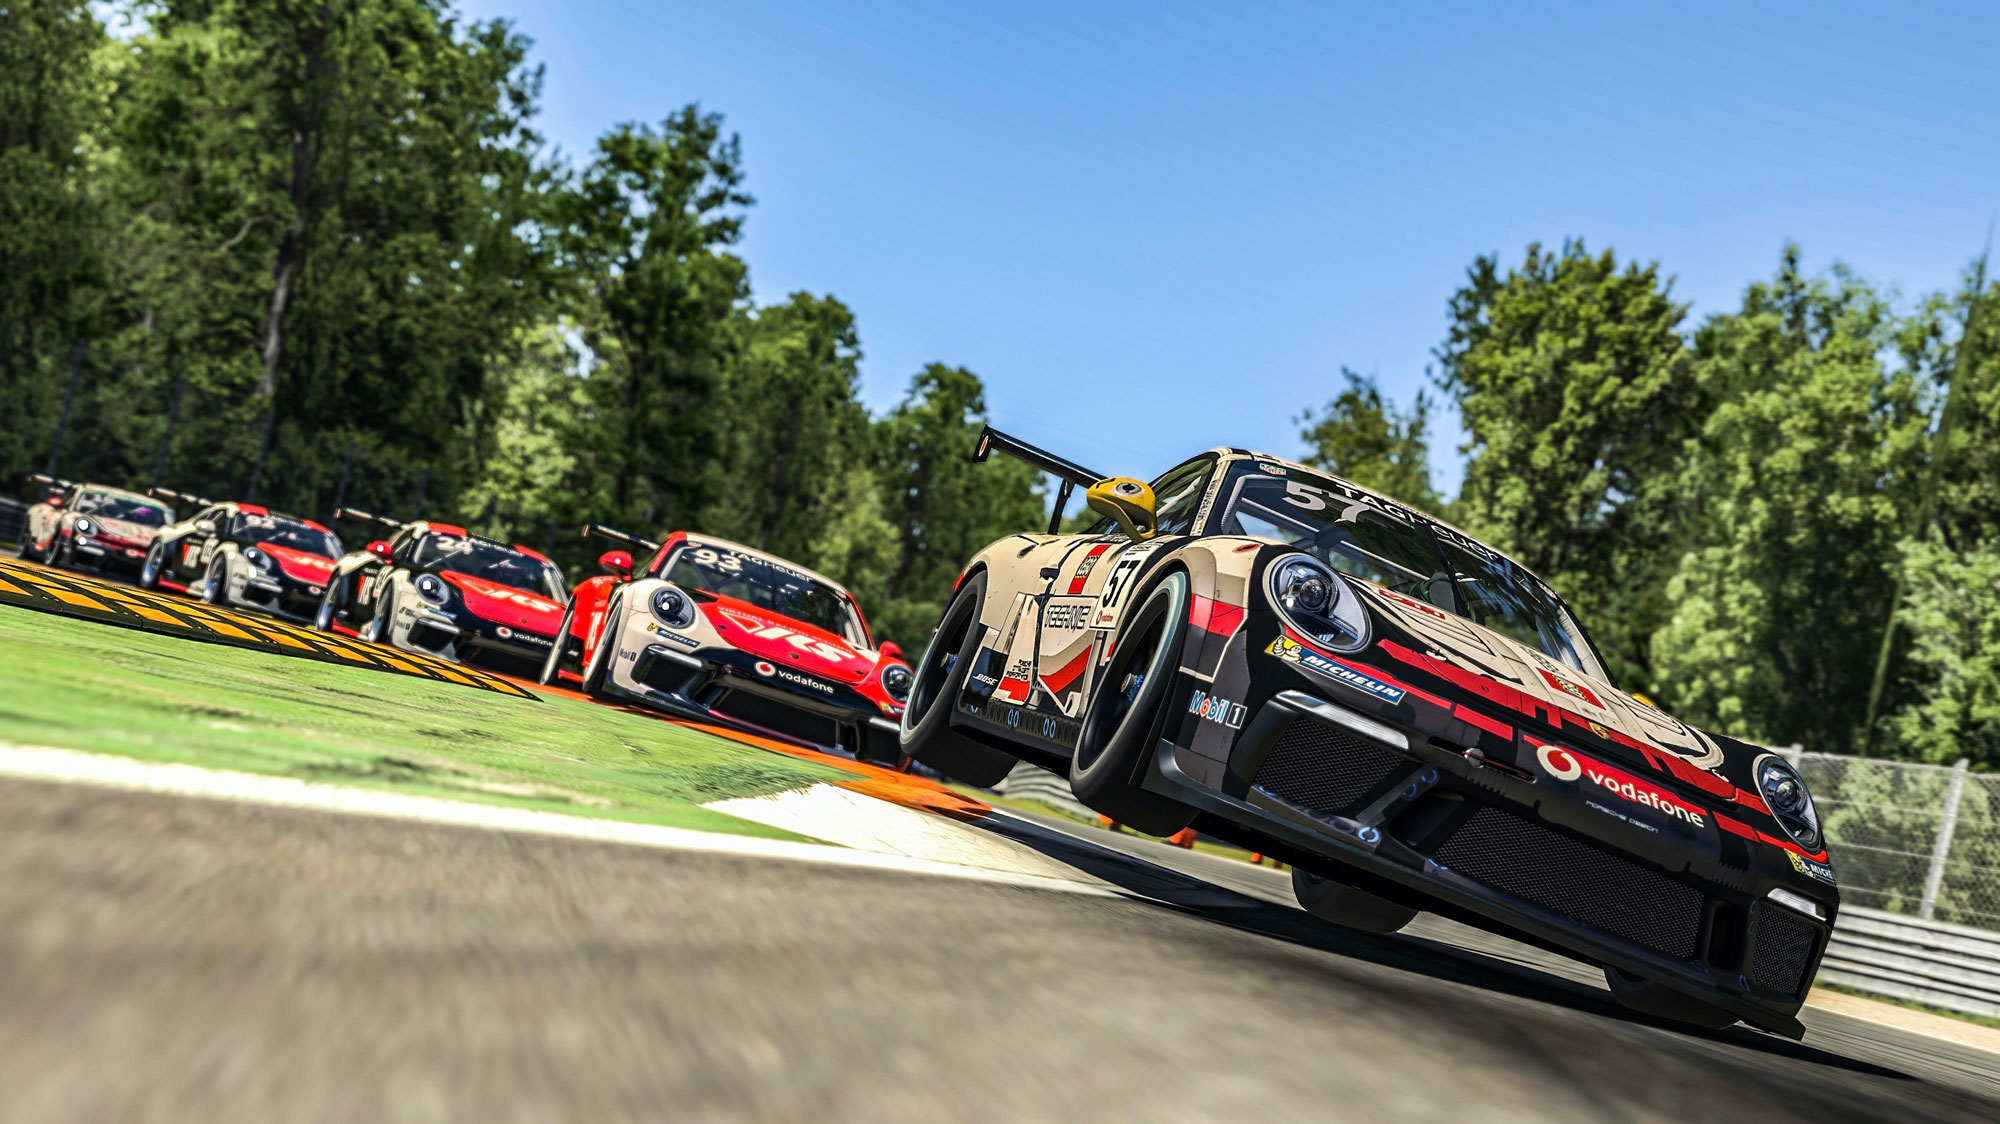 Porsche 911 racecars on track in an Esports race